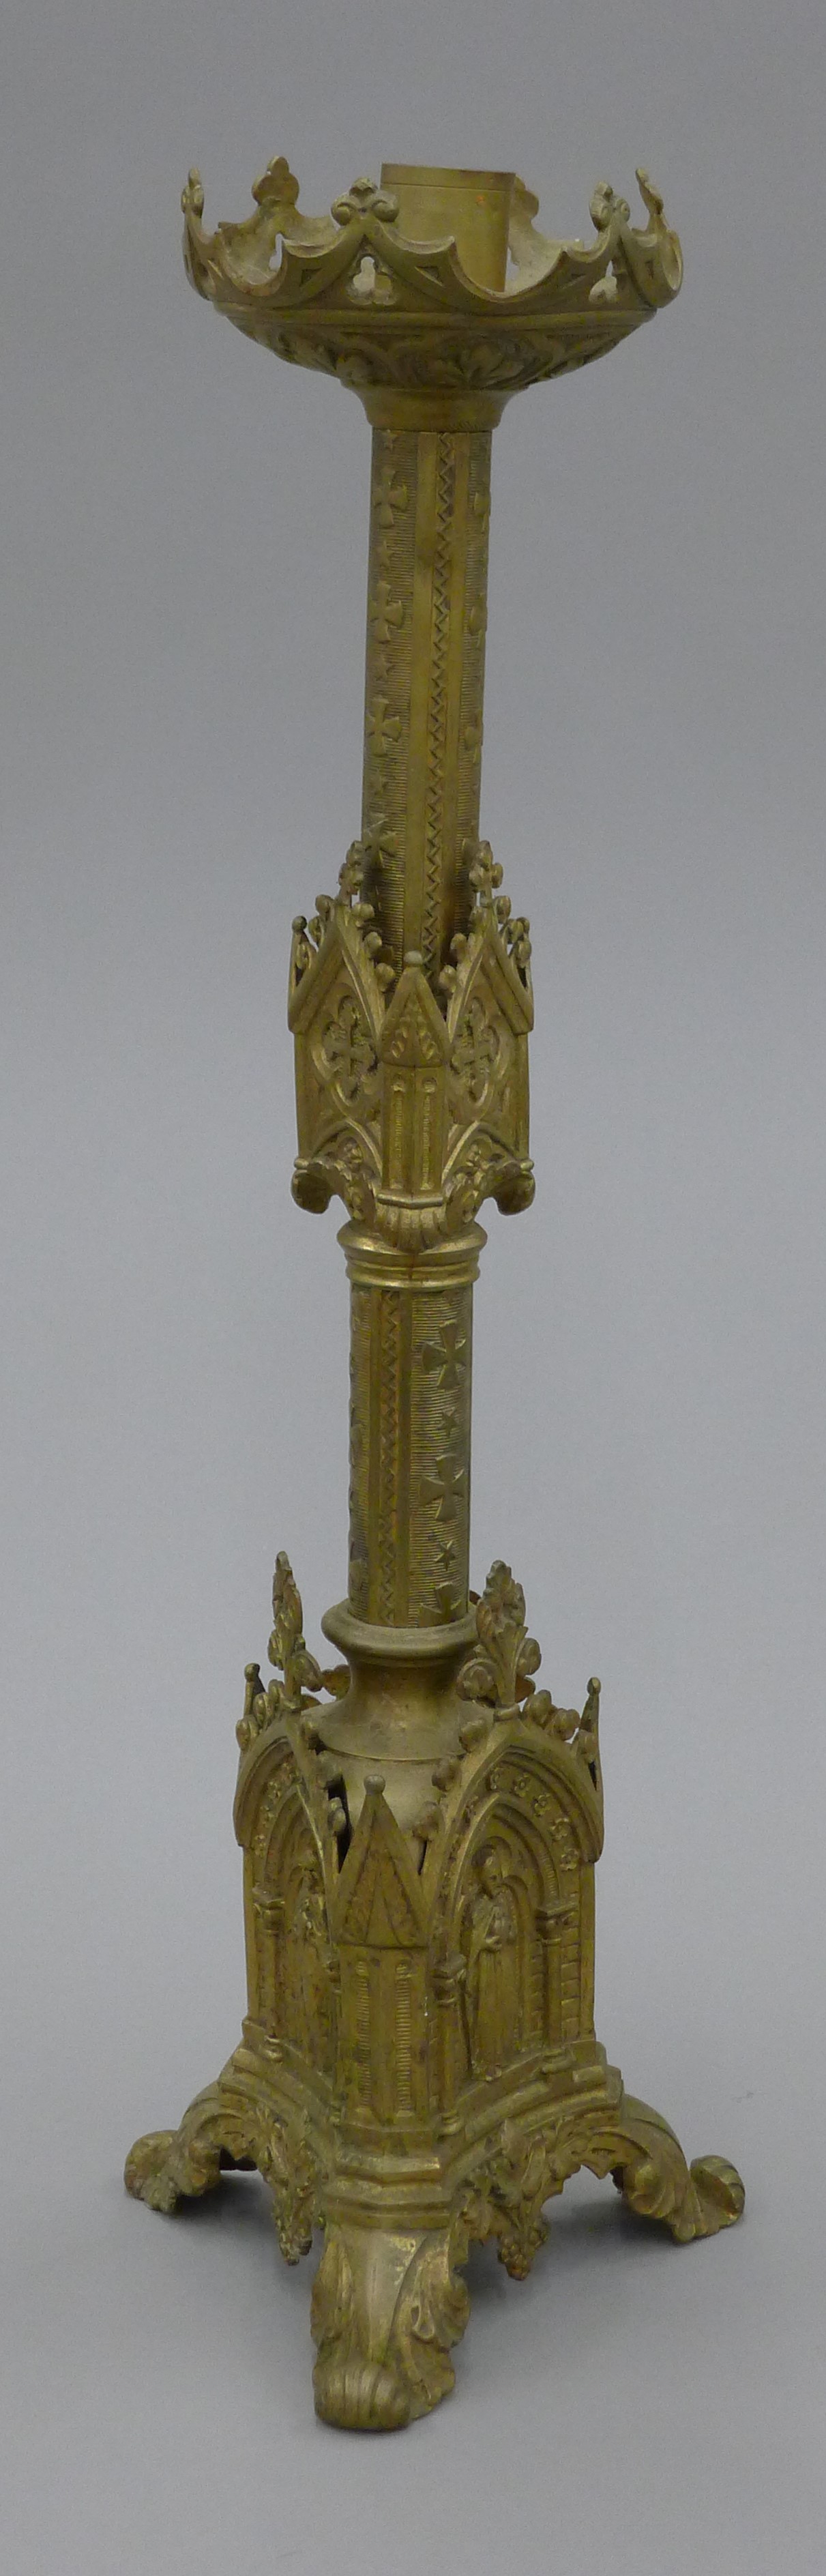 A pair of ornate brass altar candlesticks. 56 cm high. - Image 2 of 6